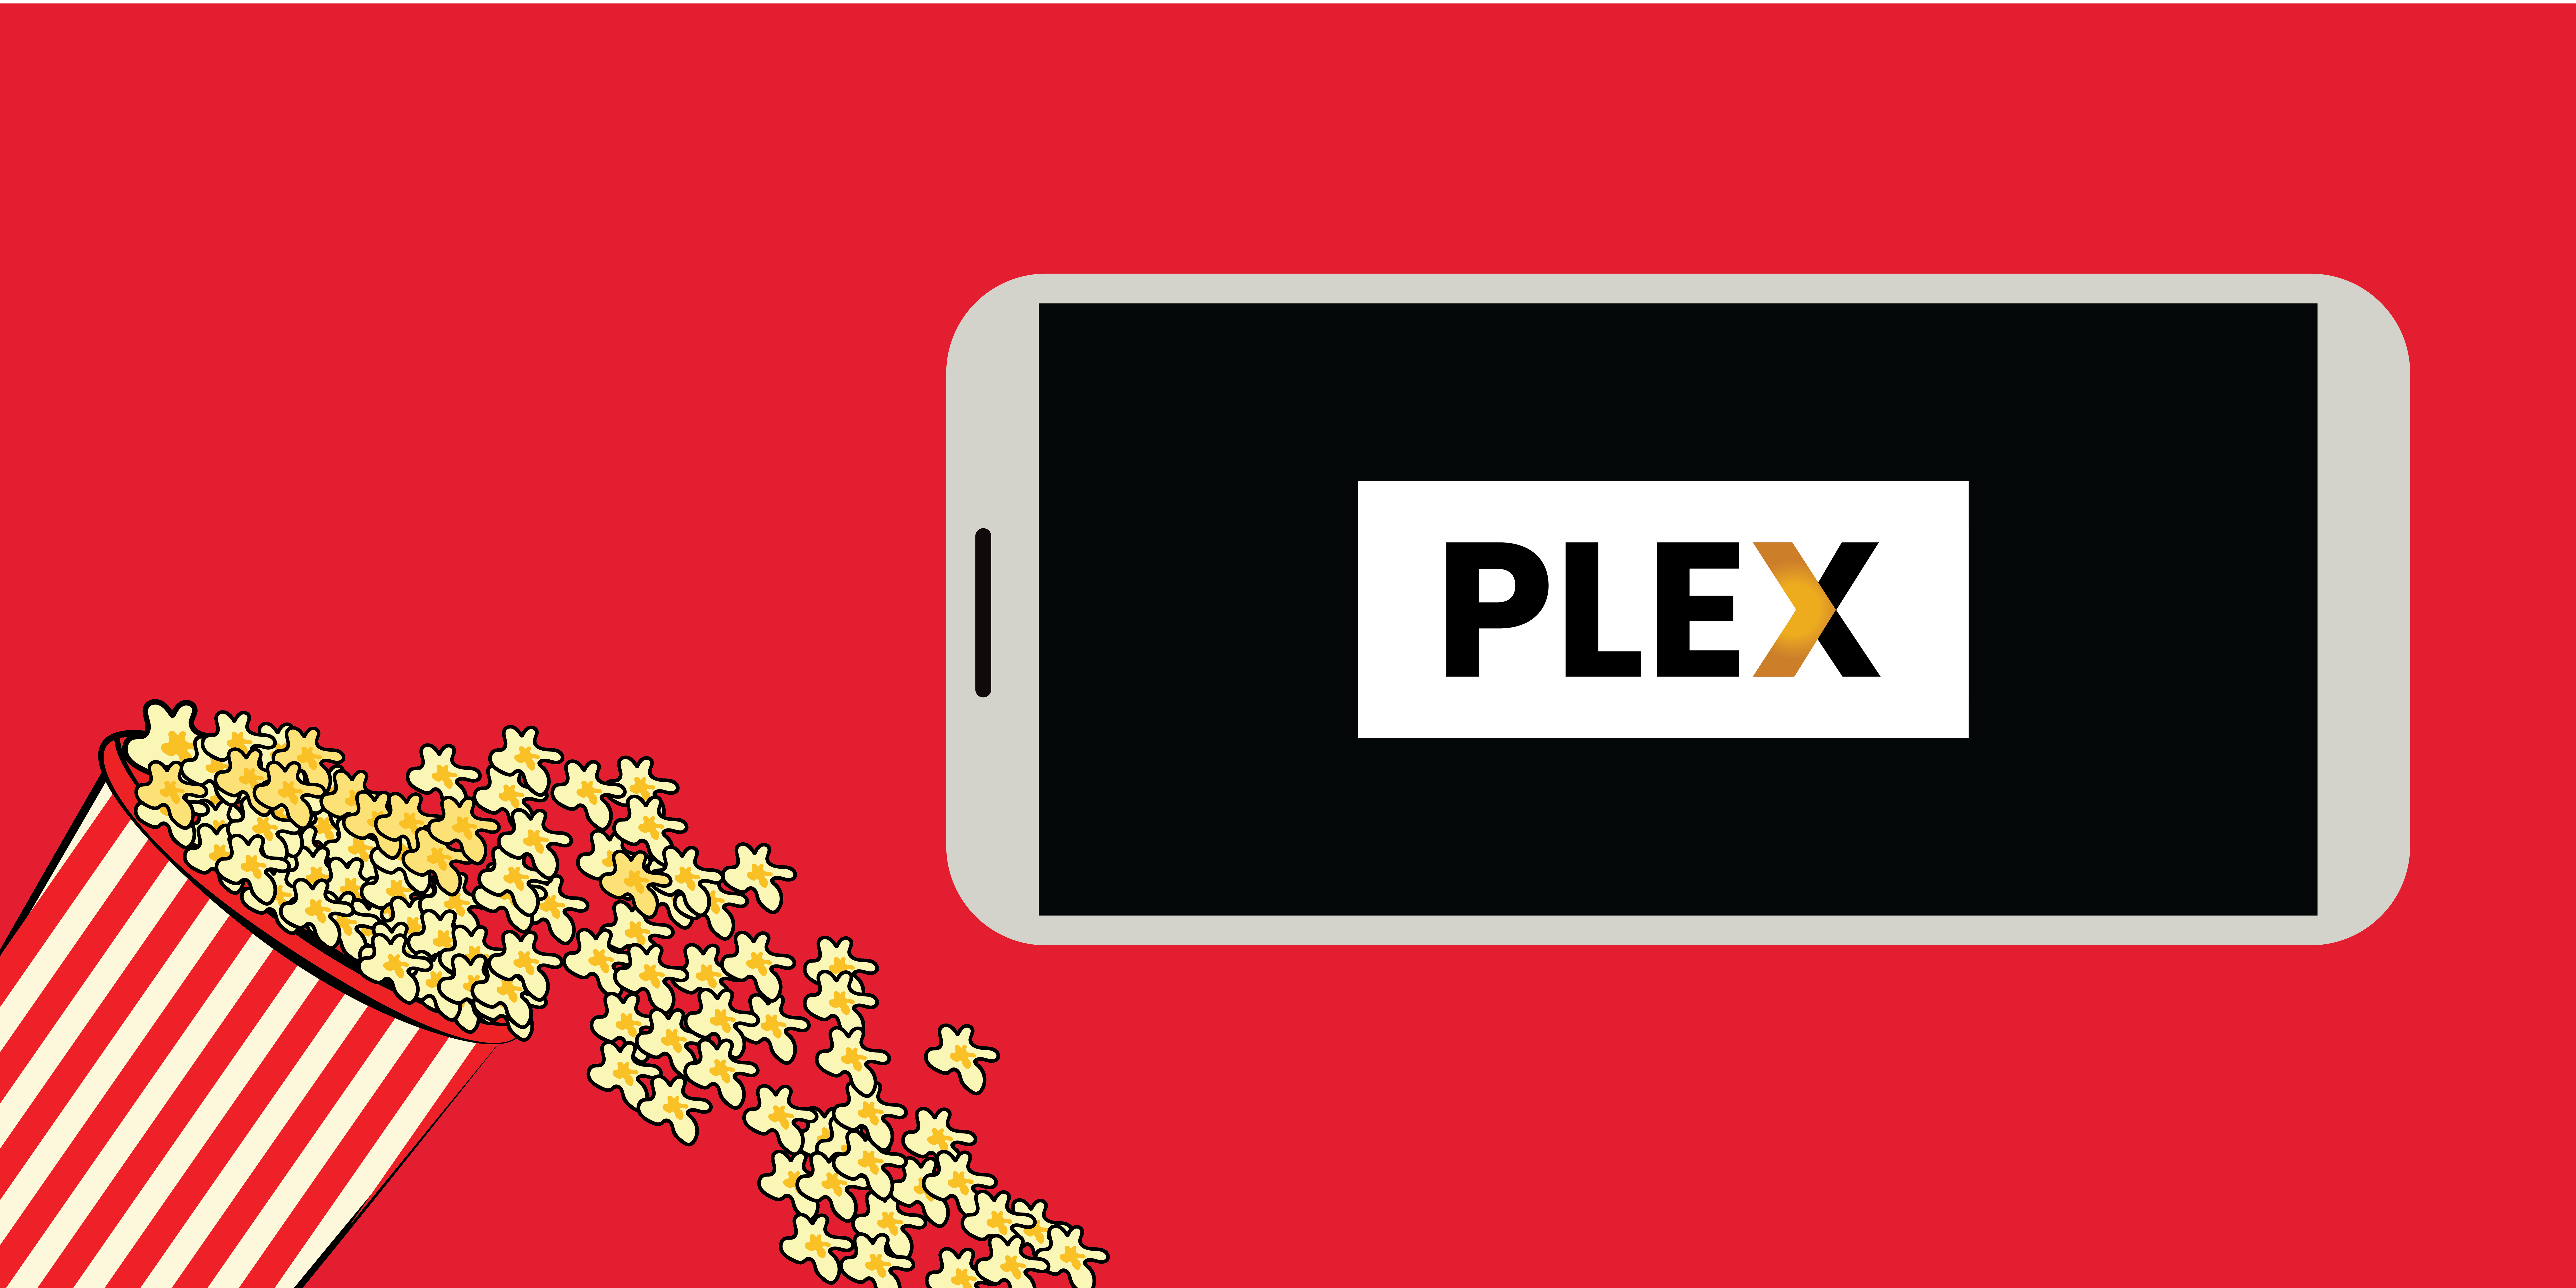 plex-logo-illustration